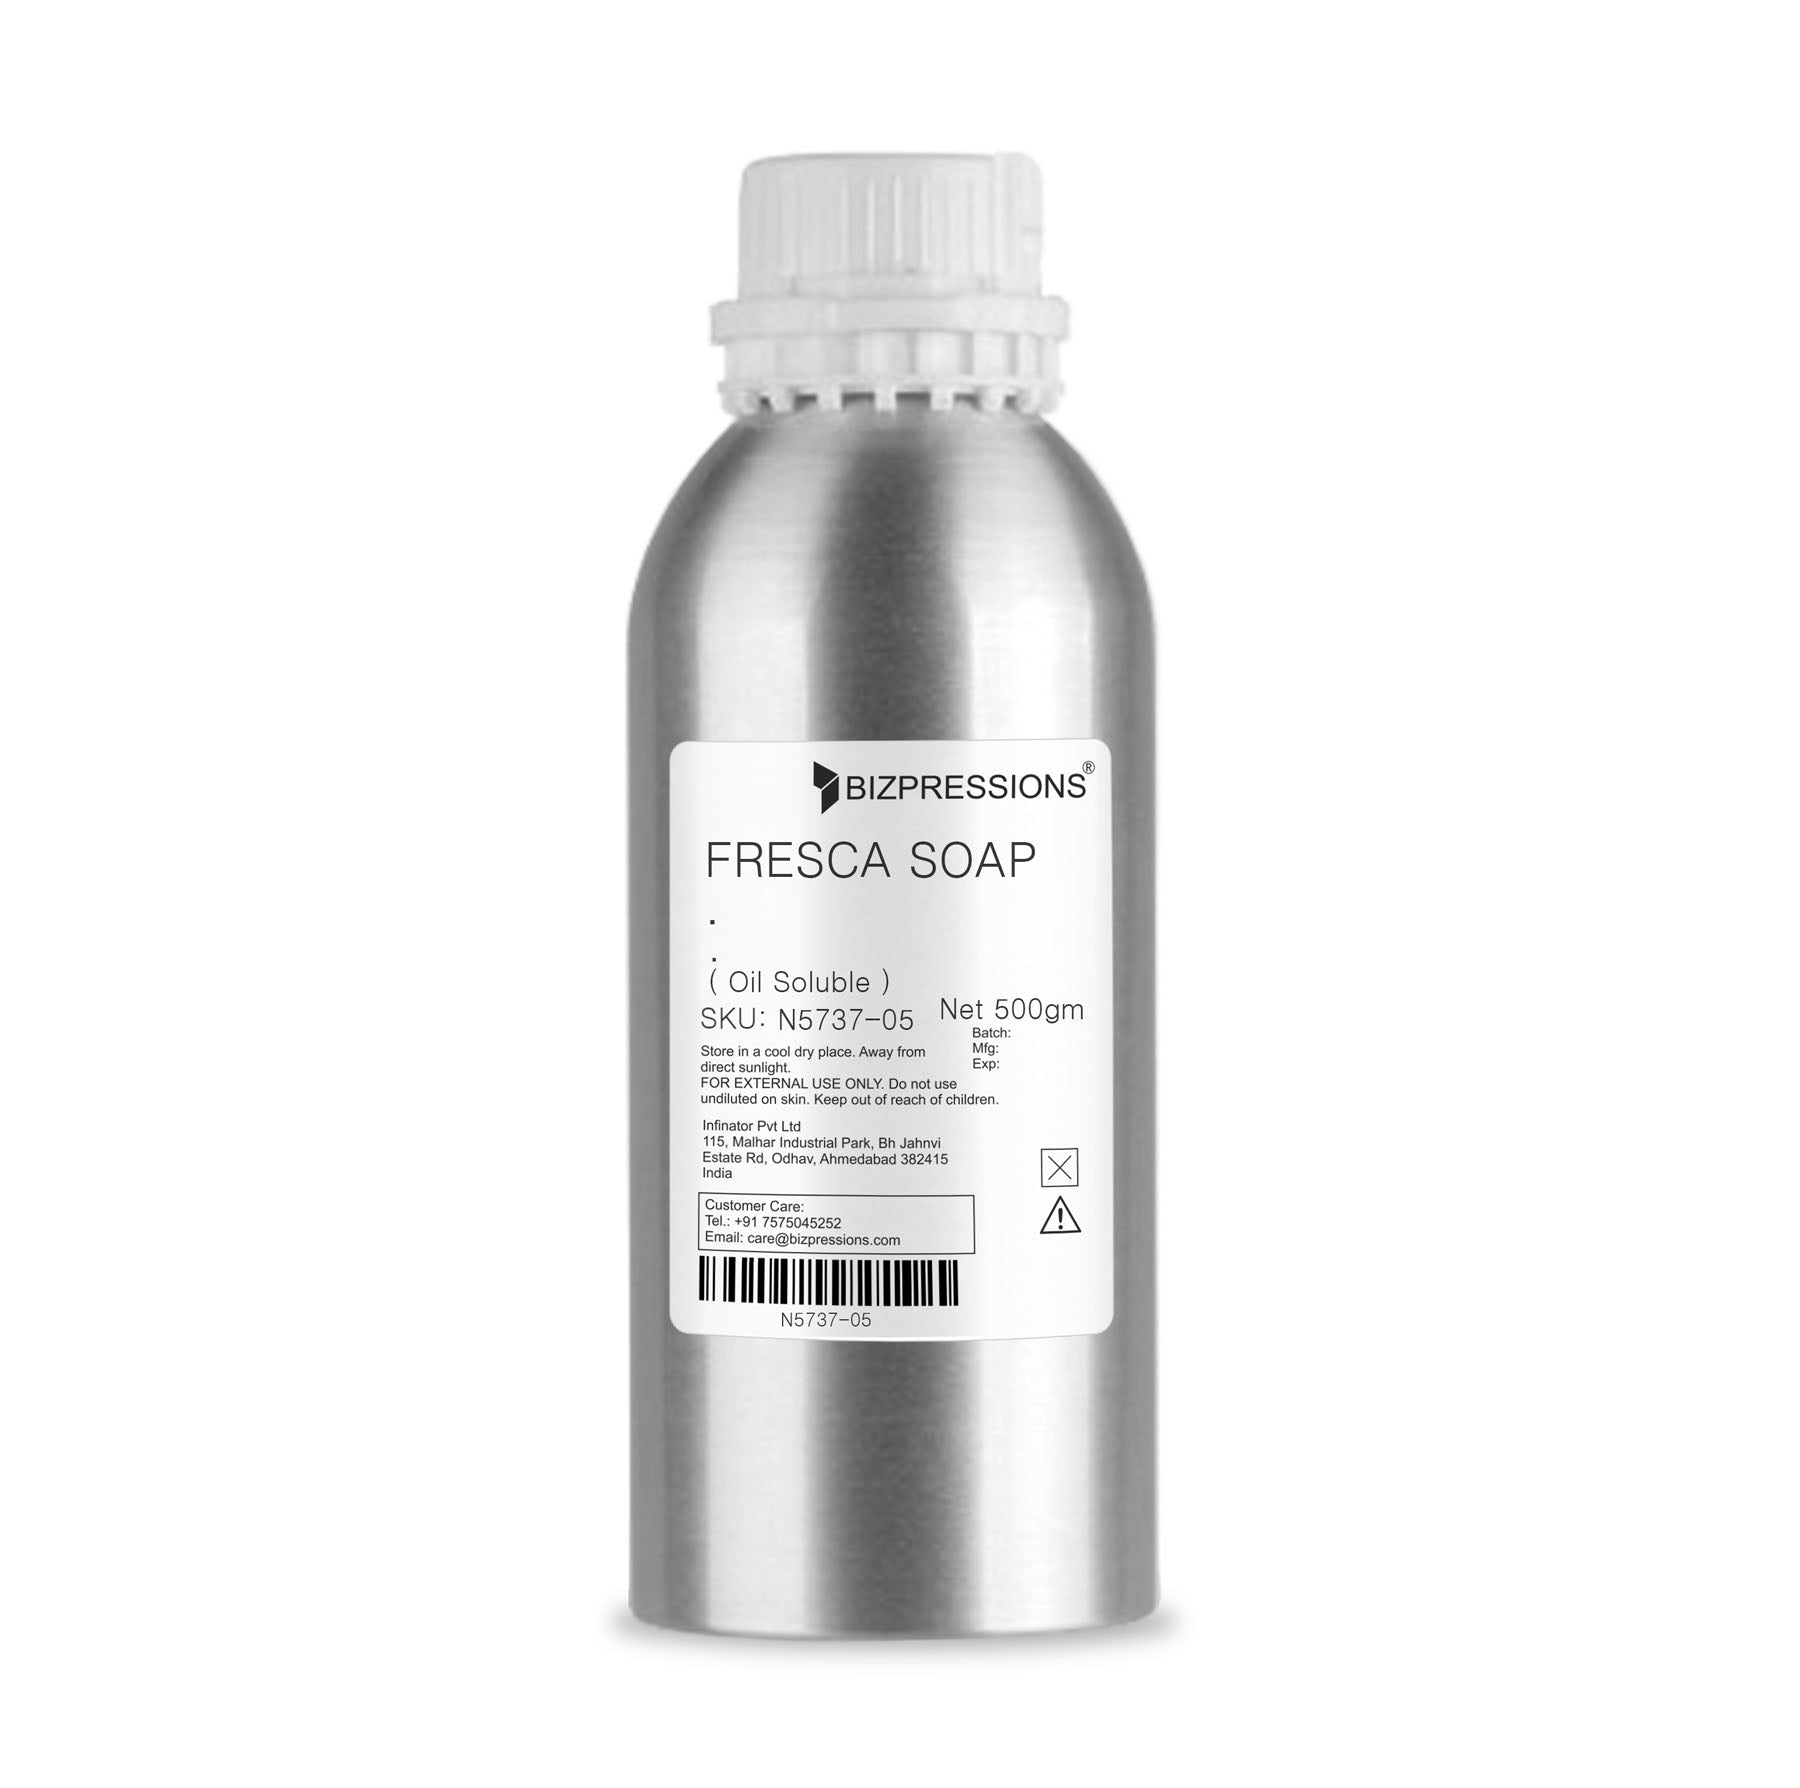 FRESCA SOAP - Fragrance ( Oil Soluble ) - 500 gm